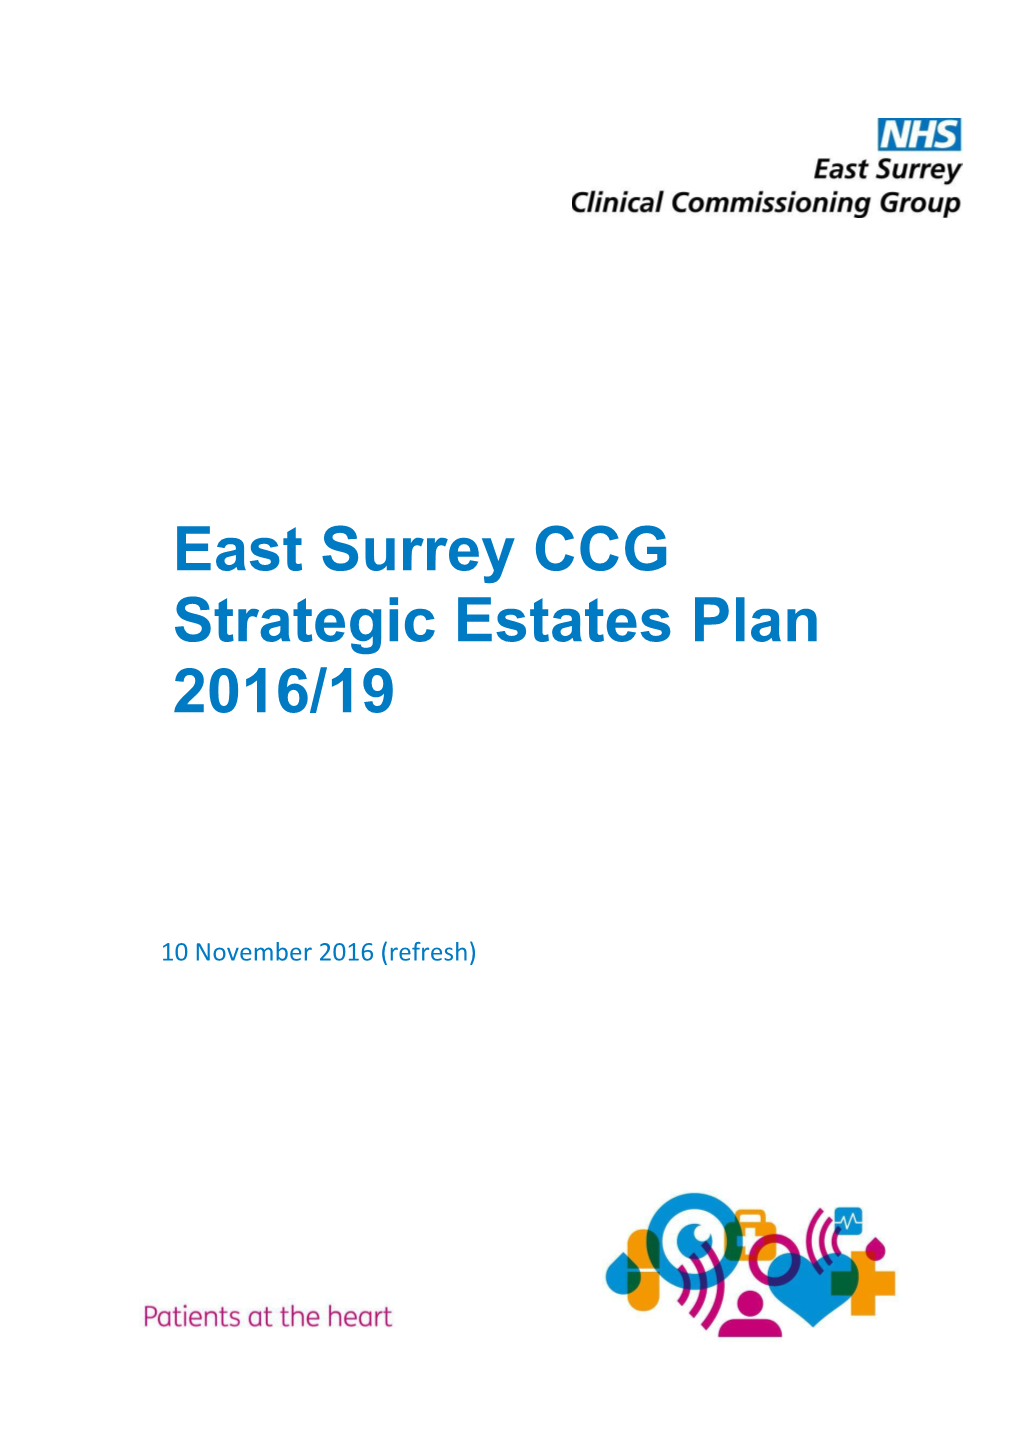 East Surrey CCG Strategic Estates Plan 2016/19